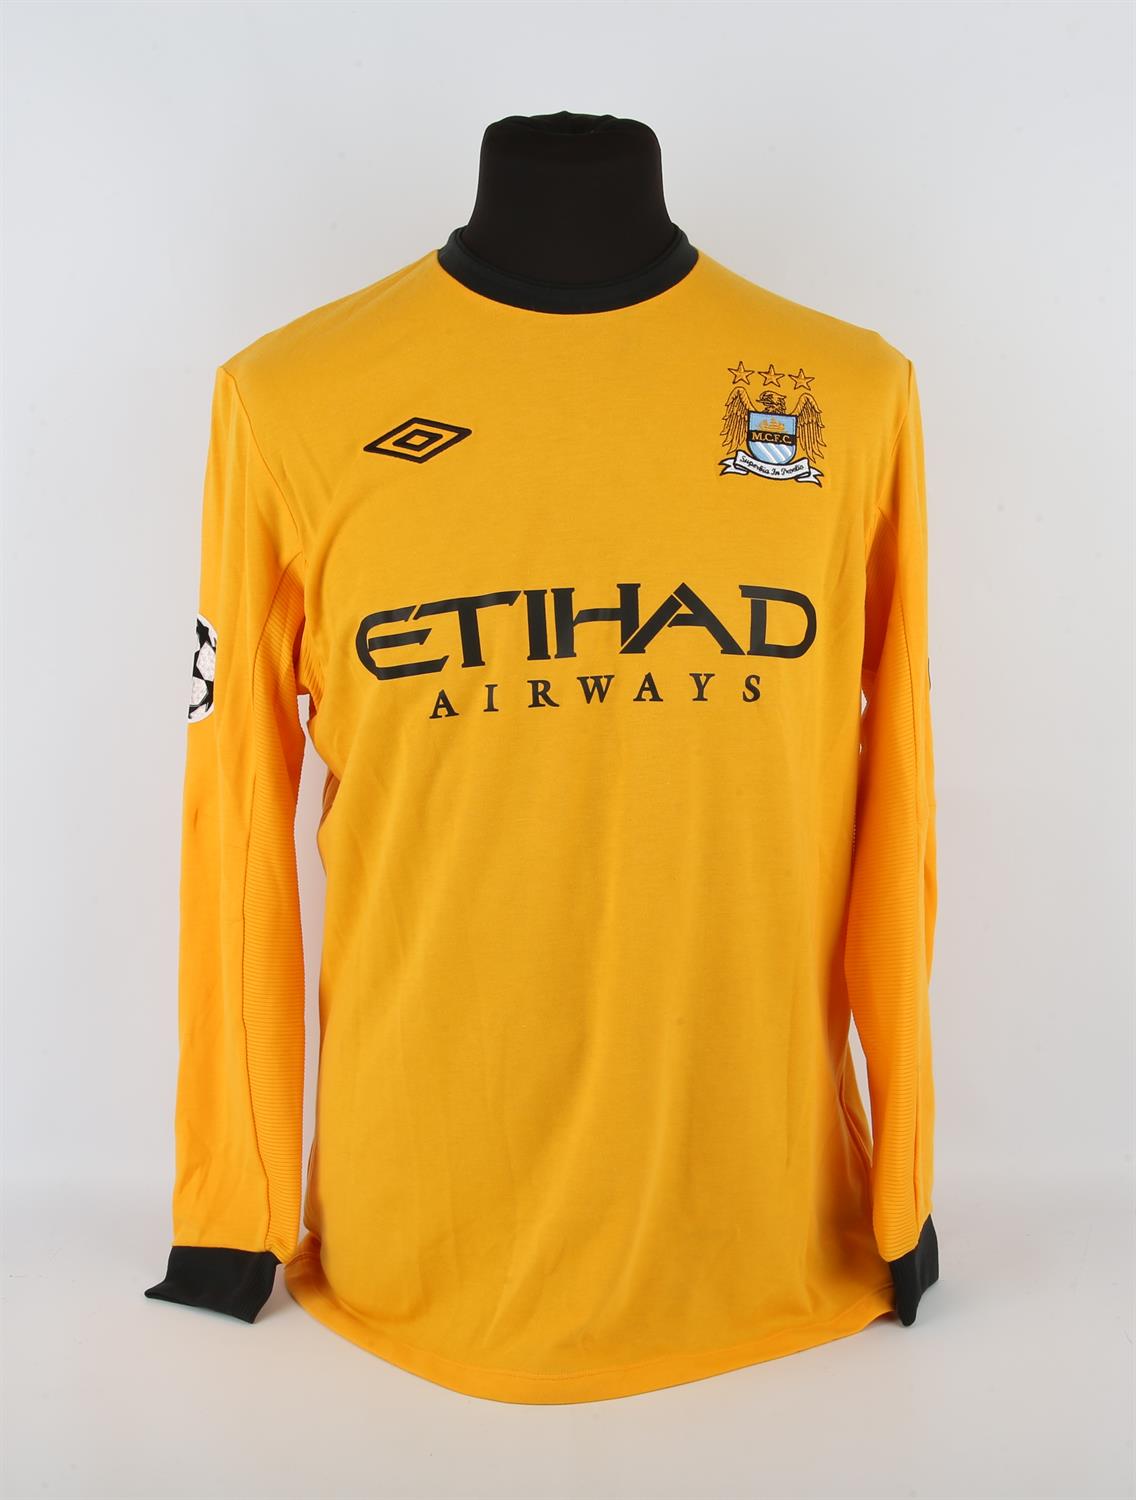 Manchester City Football Club, Joe Hart (No.25) Champions League 3rd kit shirt 2011-2012. L/S. - Image 2 of 2